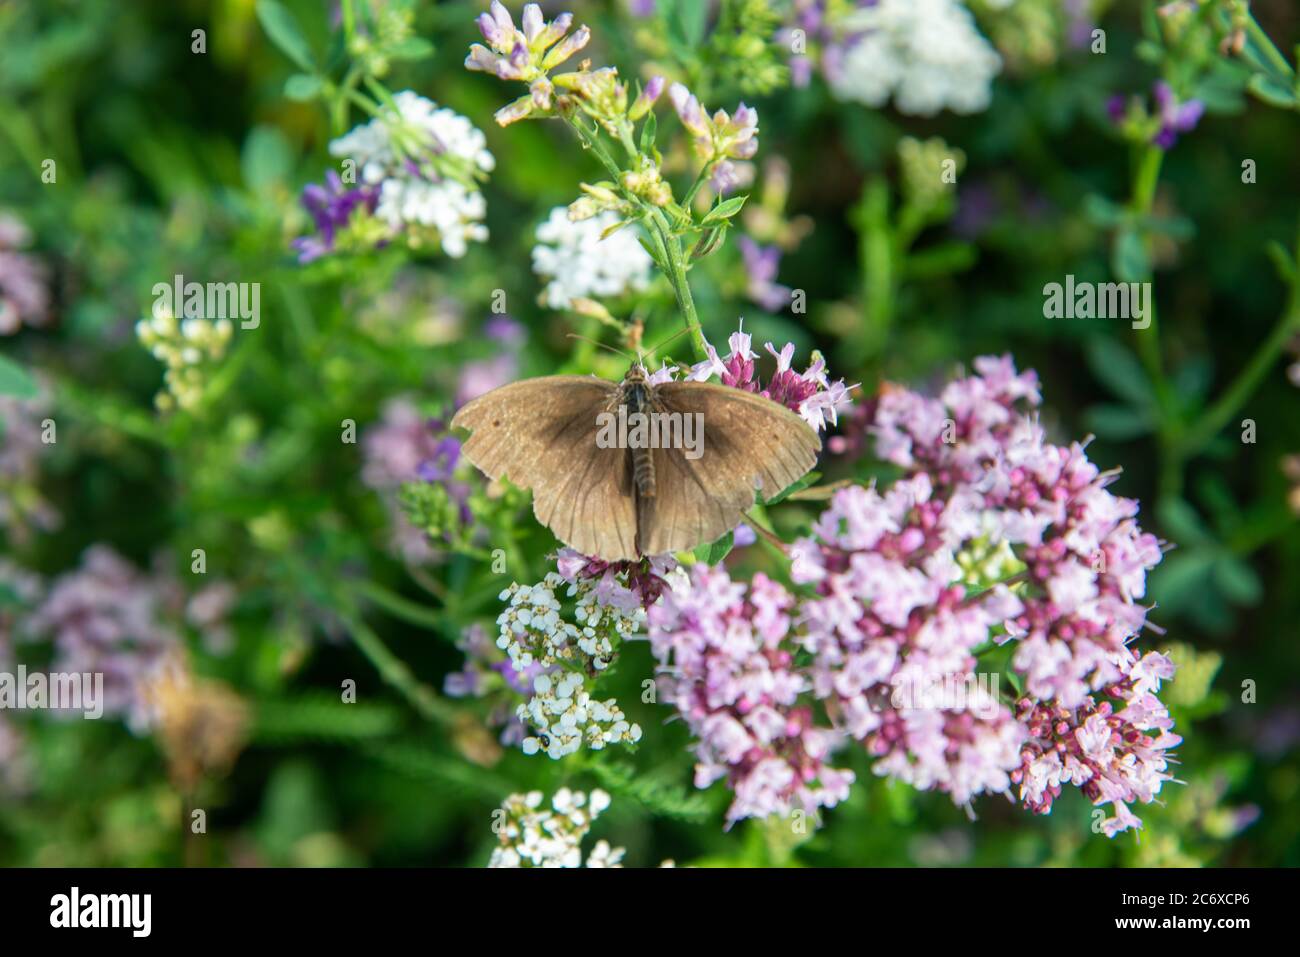 koevinkje or hyperanthus butterfly at blooming wild oregano Stock Photo